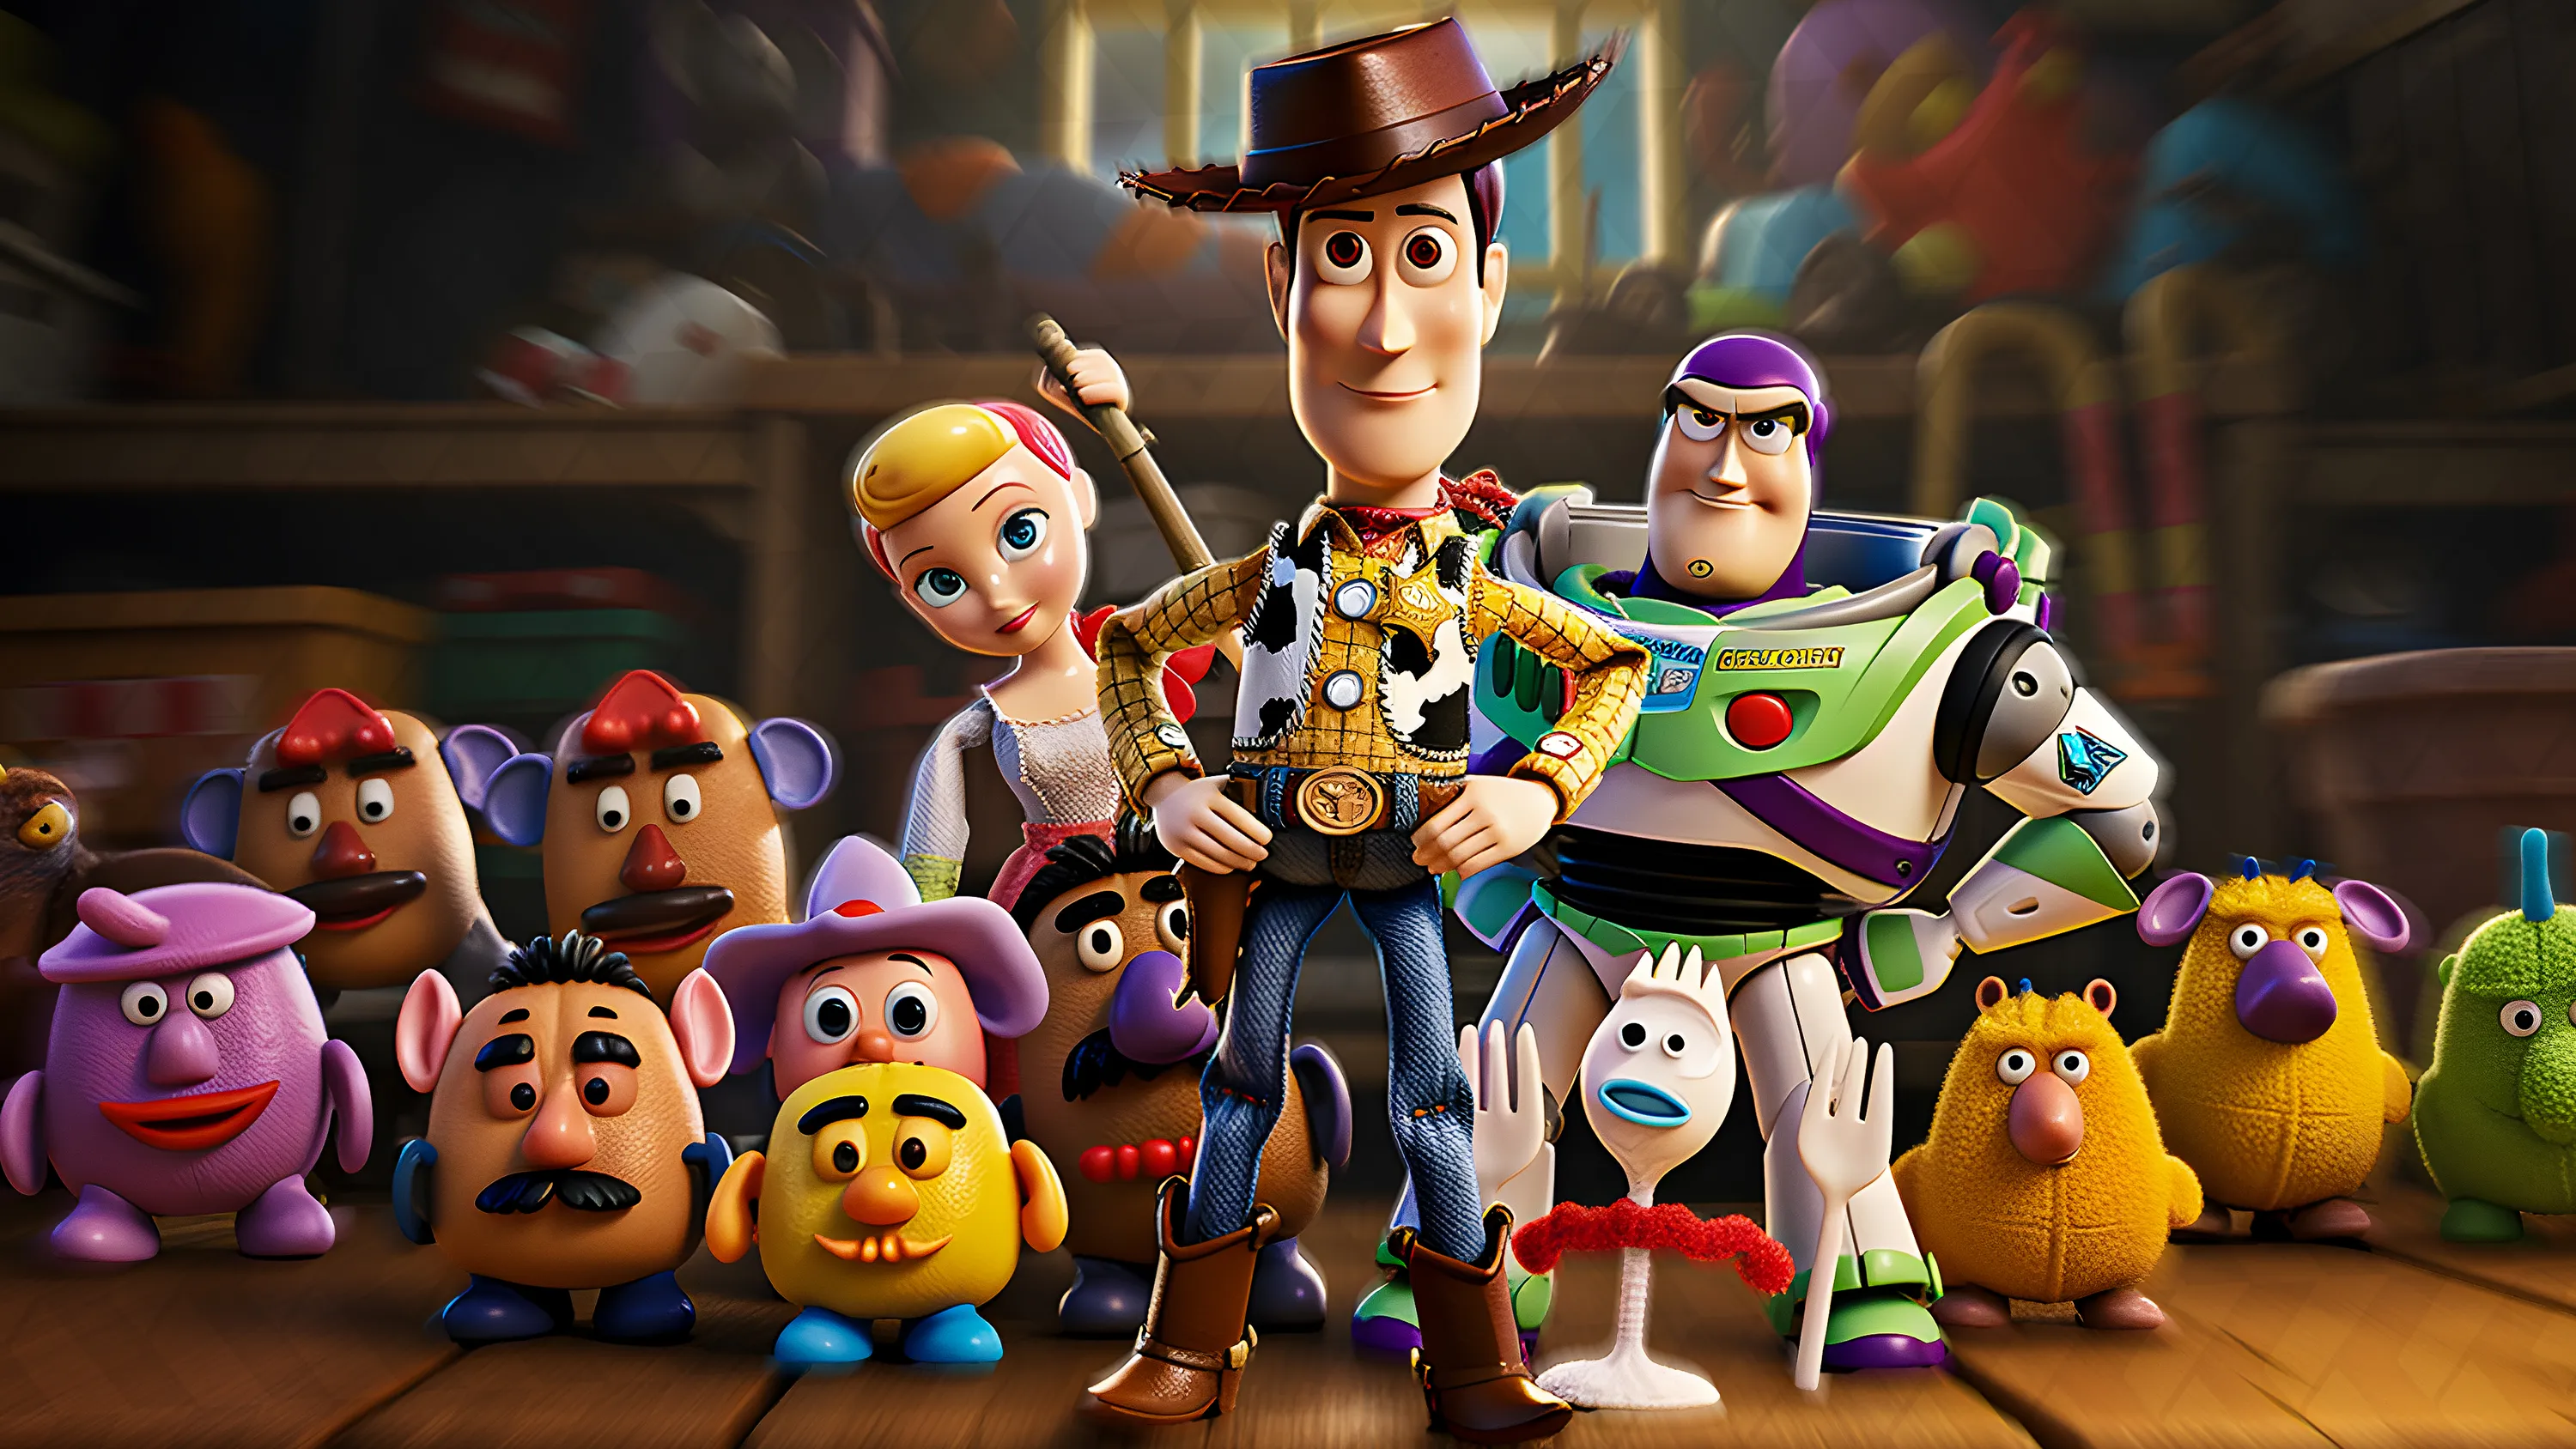 Buzz Lightyear Sheriff Woody Andy Toy Story Pixar edec logo pixar film  Poster desktop Wallpaper png  PNGWing